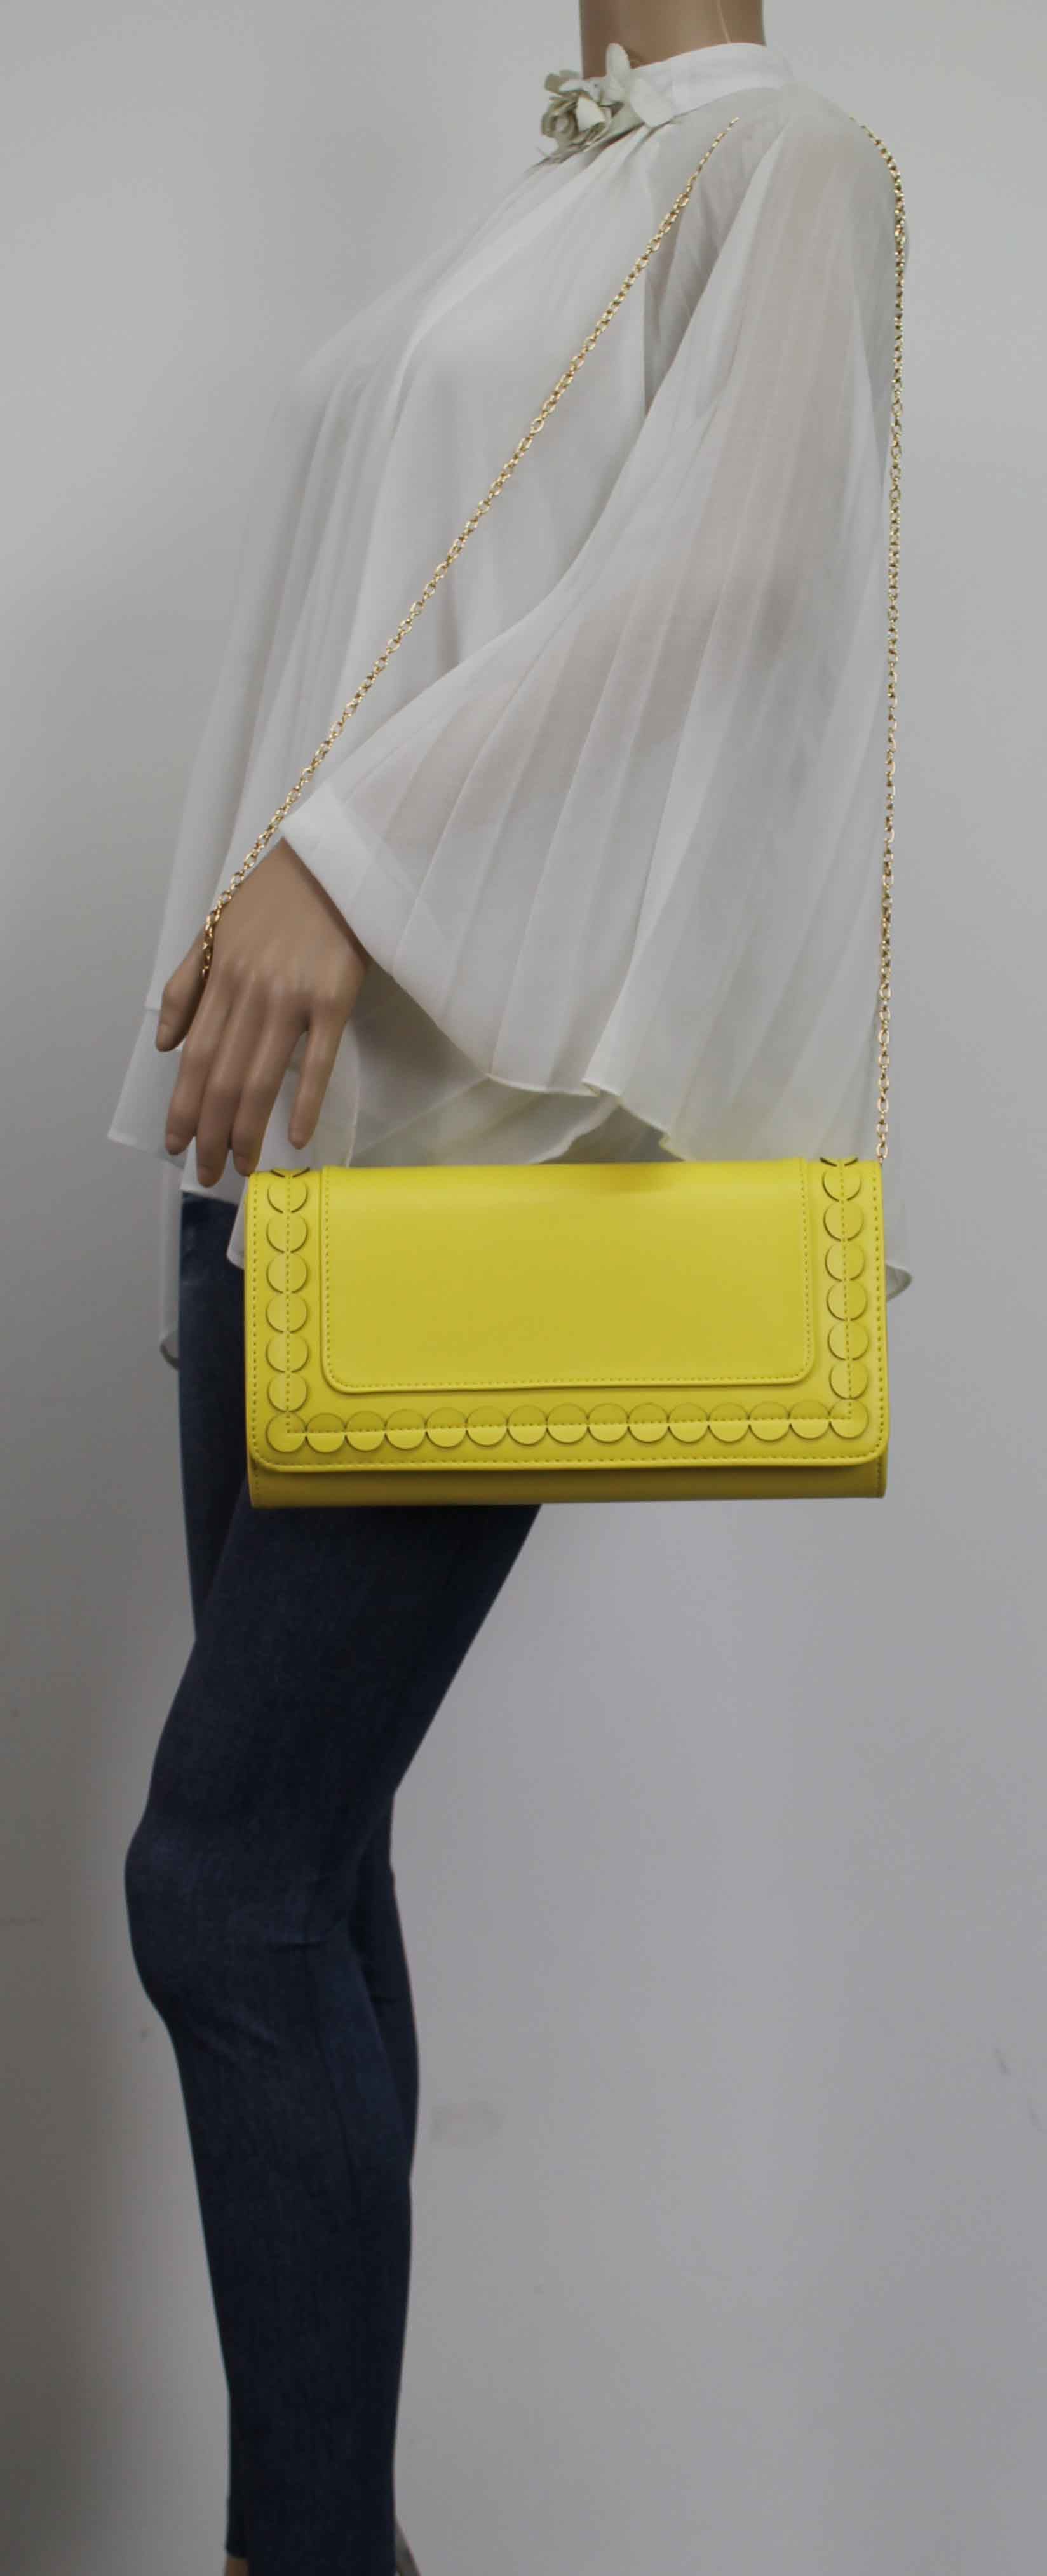 SWANKYSWANS Macy Clutch Bag Yellow Cute Cheap Clutch Bag For Weddings School and Work